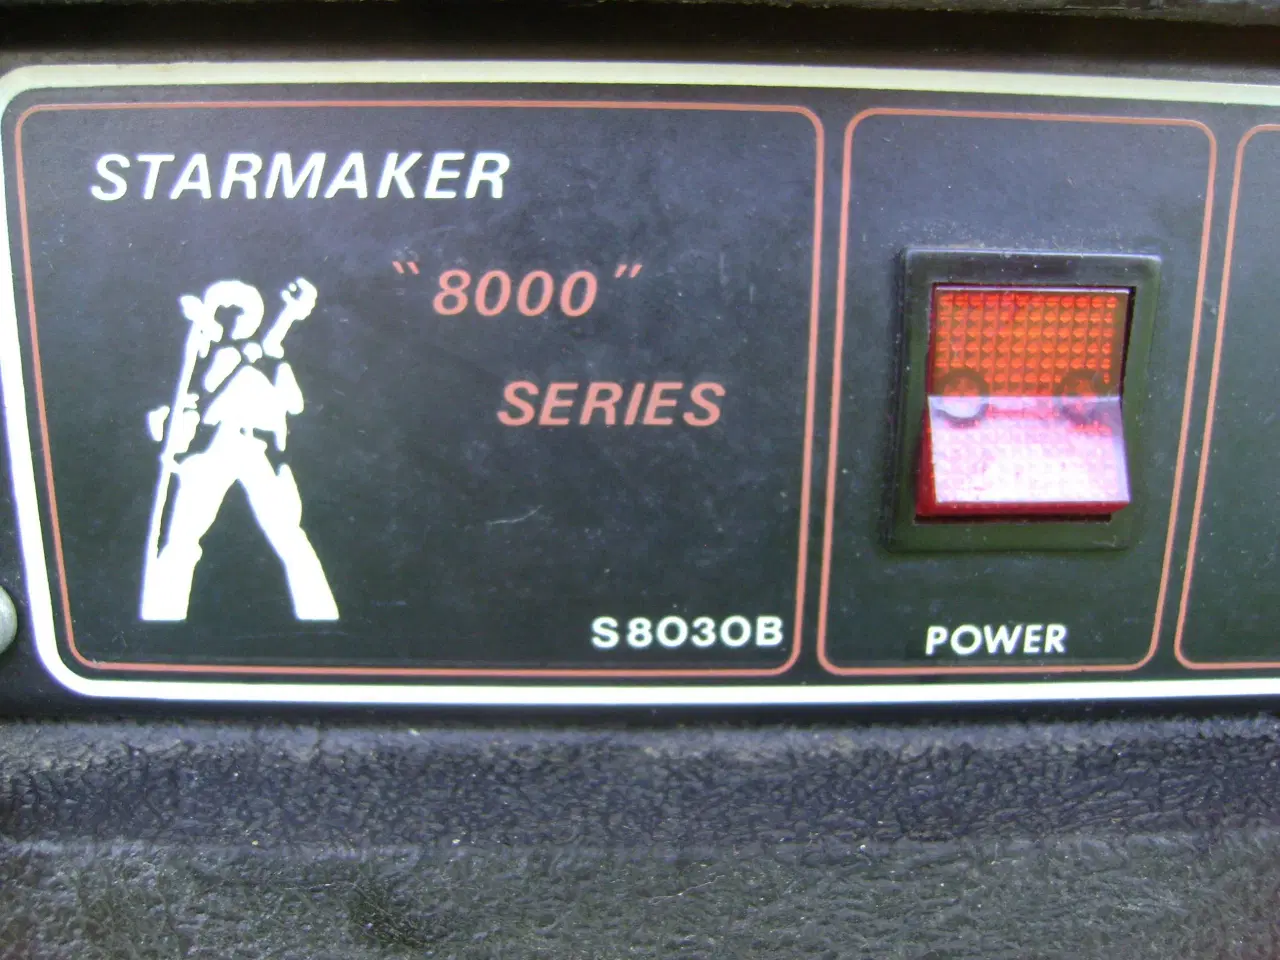 Billede 4 - Starmarker 8000 Series model S8030B